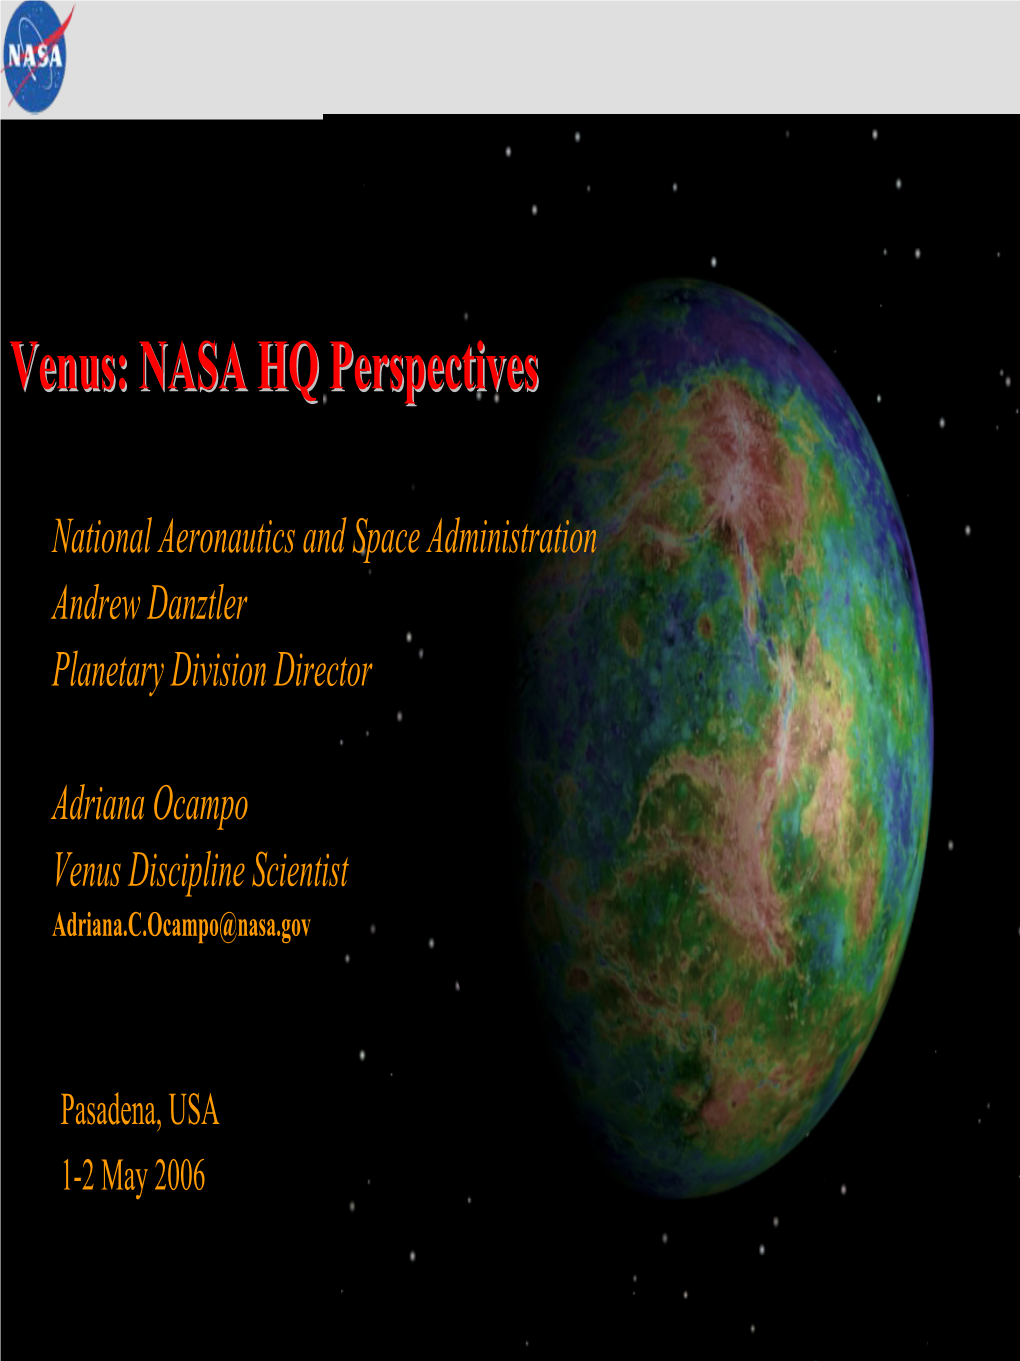 Venus Exploration Opportunities Within NASA's SSE Roadmap